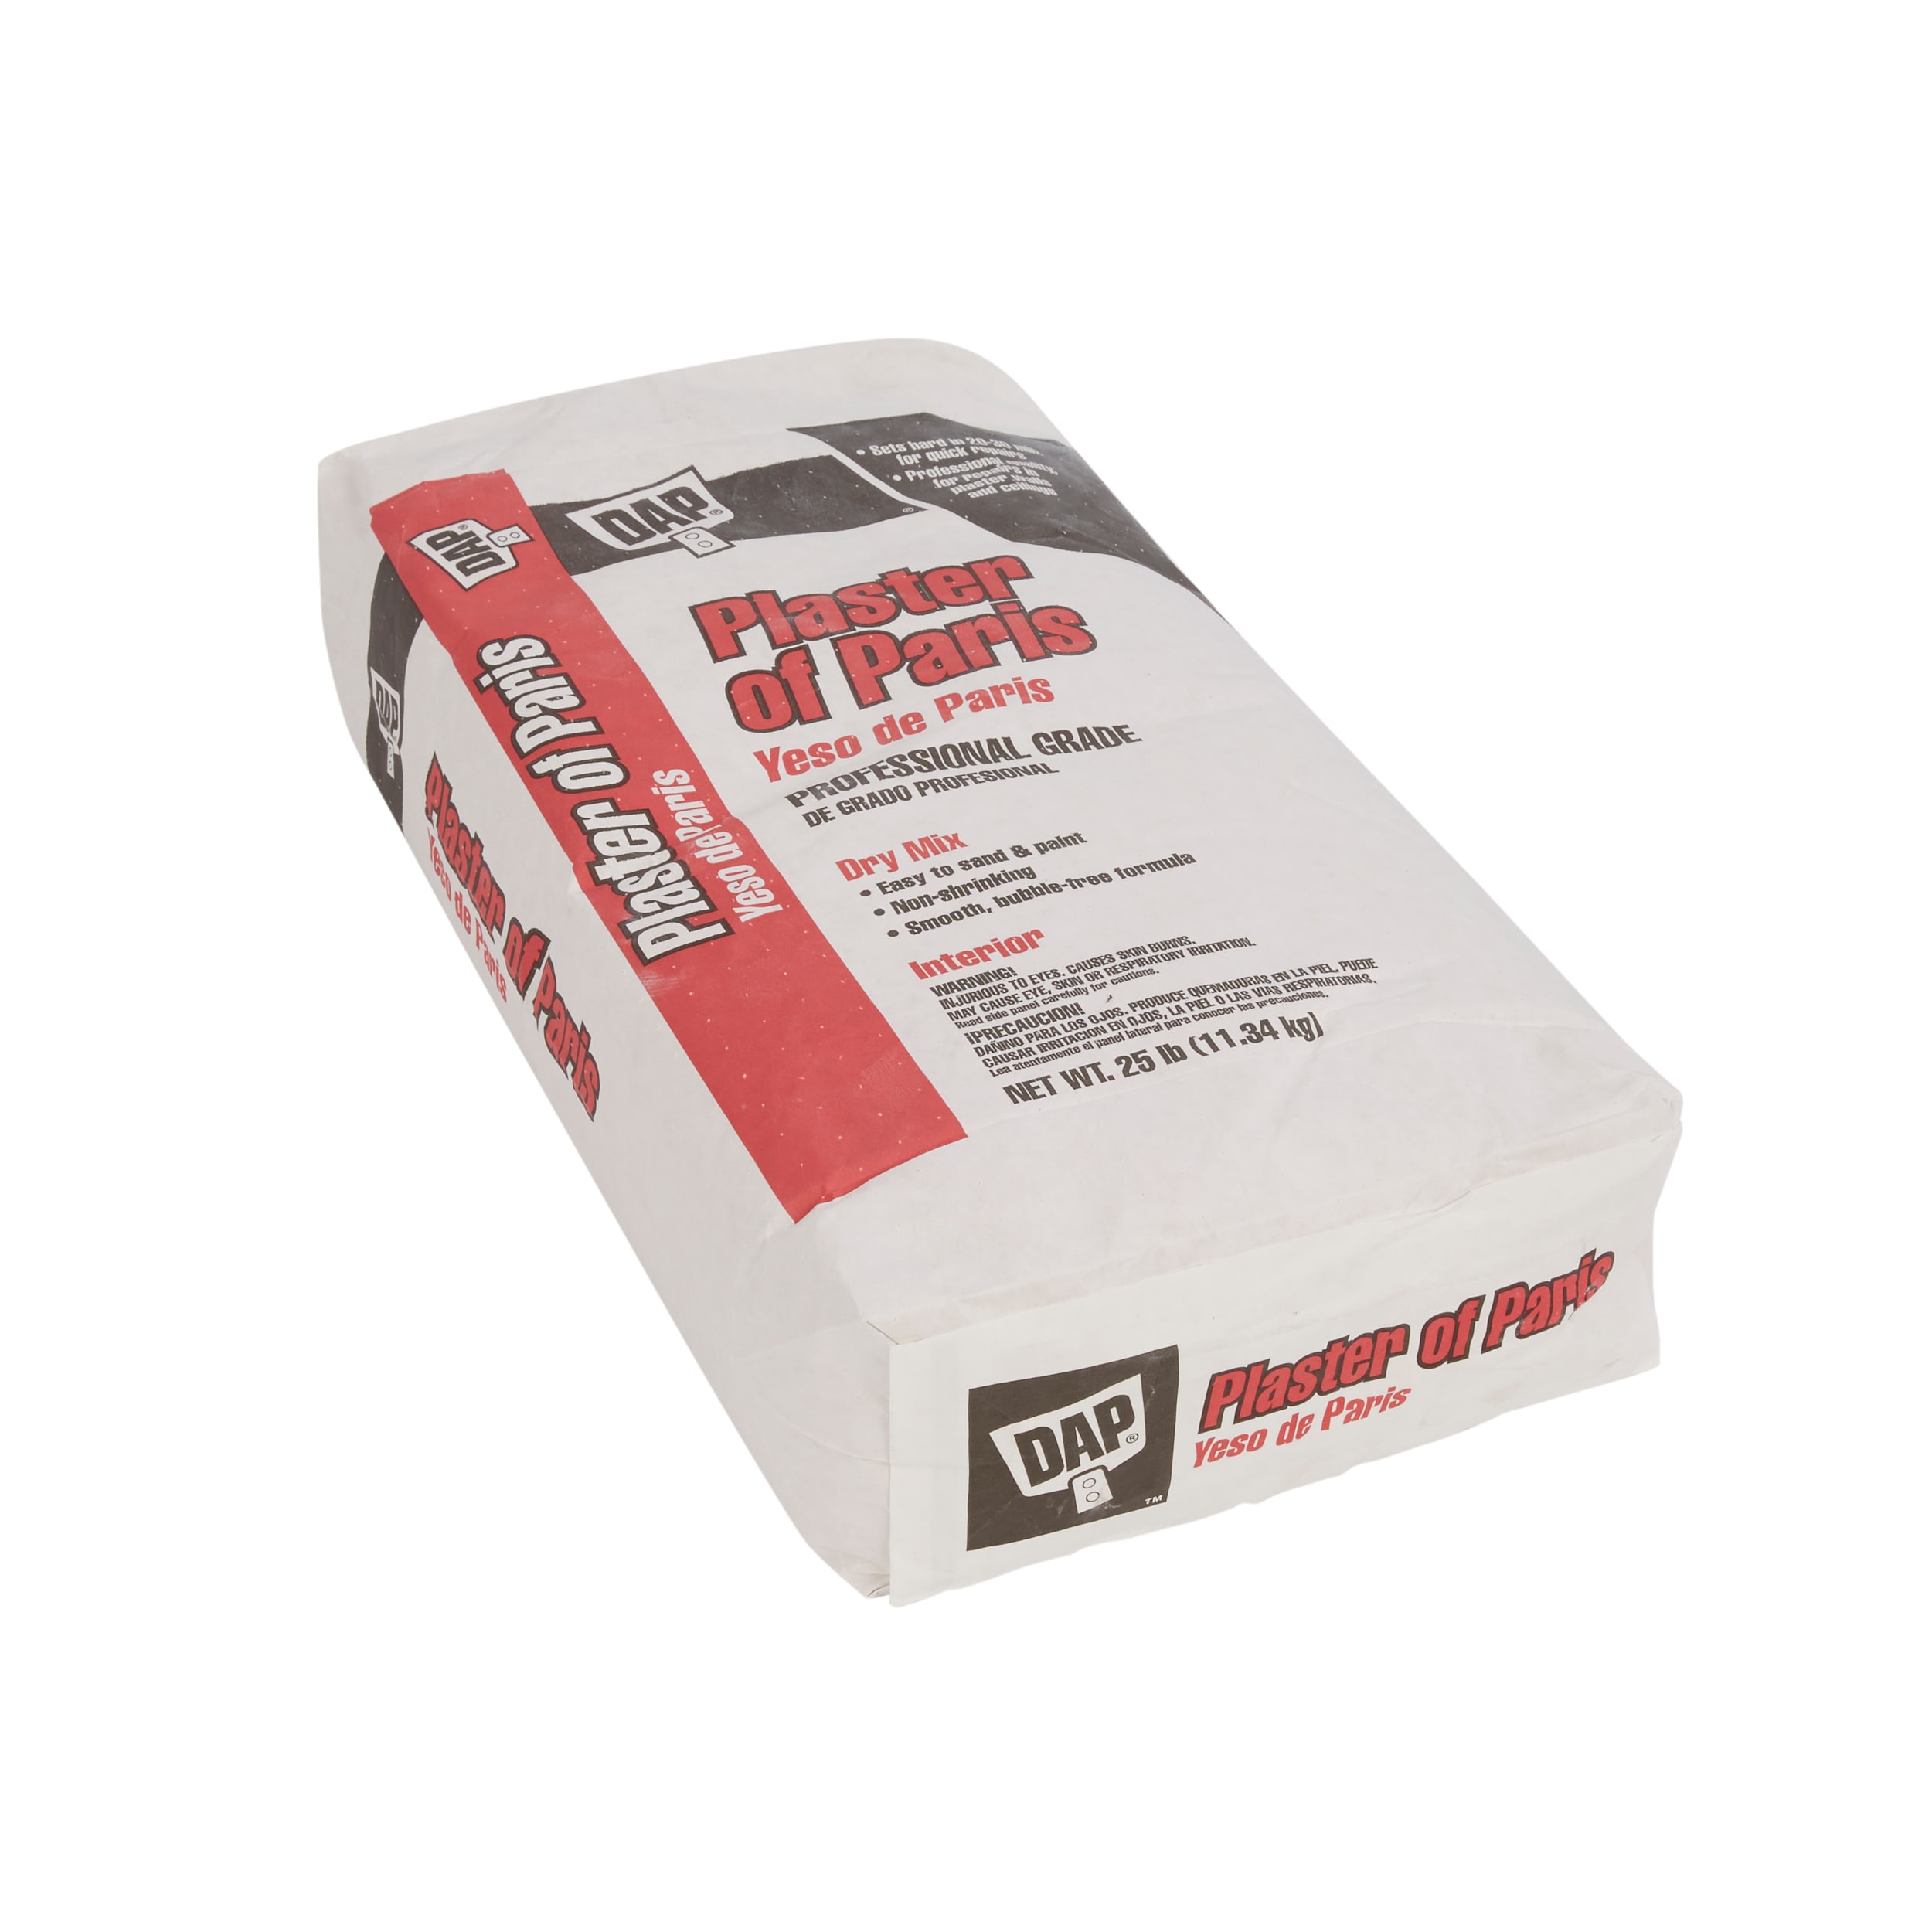 DAP Plaster of Paris 4 lbs. White Dry Mix 10318 - The Home Depot